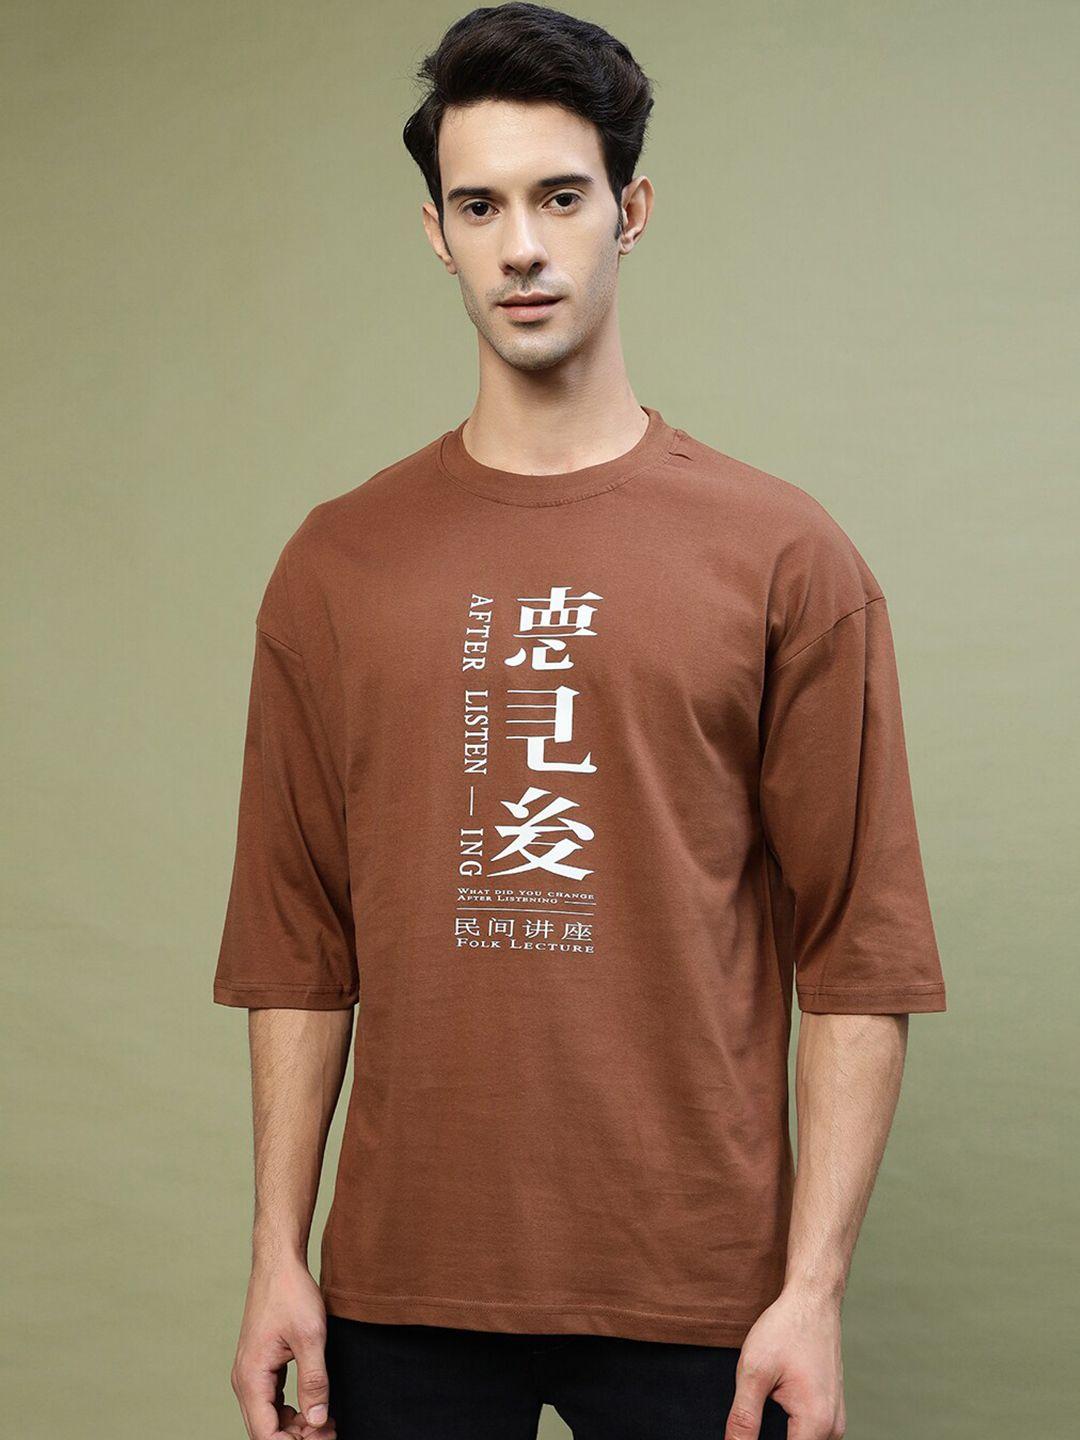 gavin paris printed pure cotton oversized t-shirt